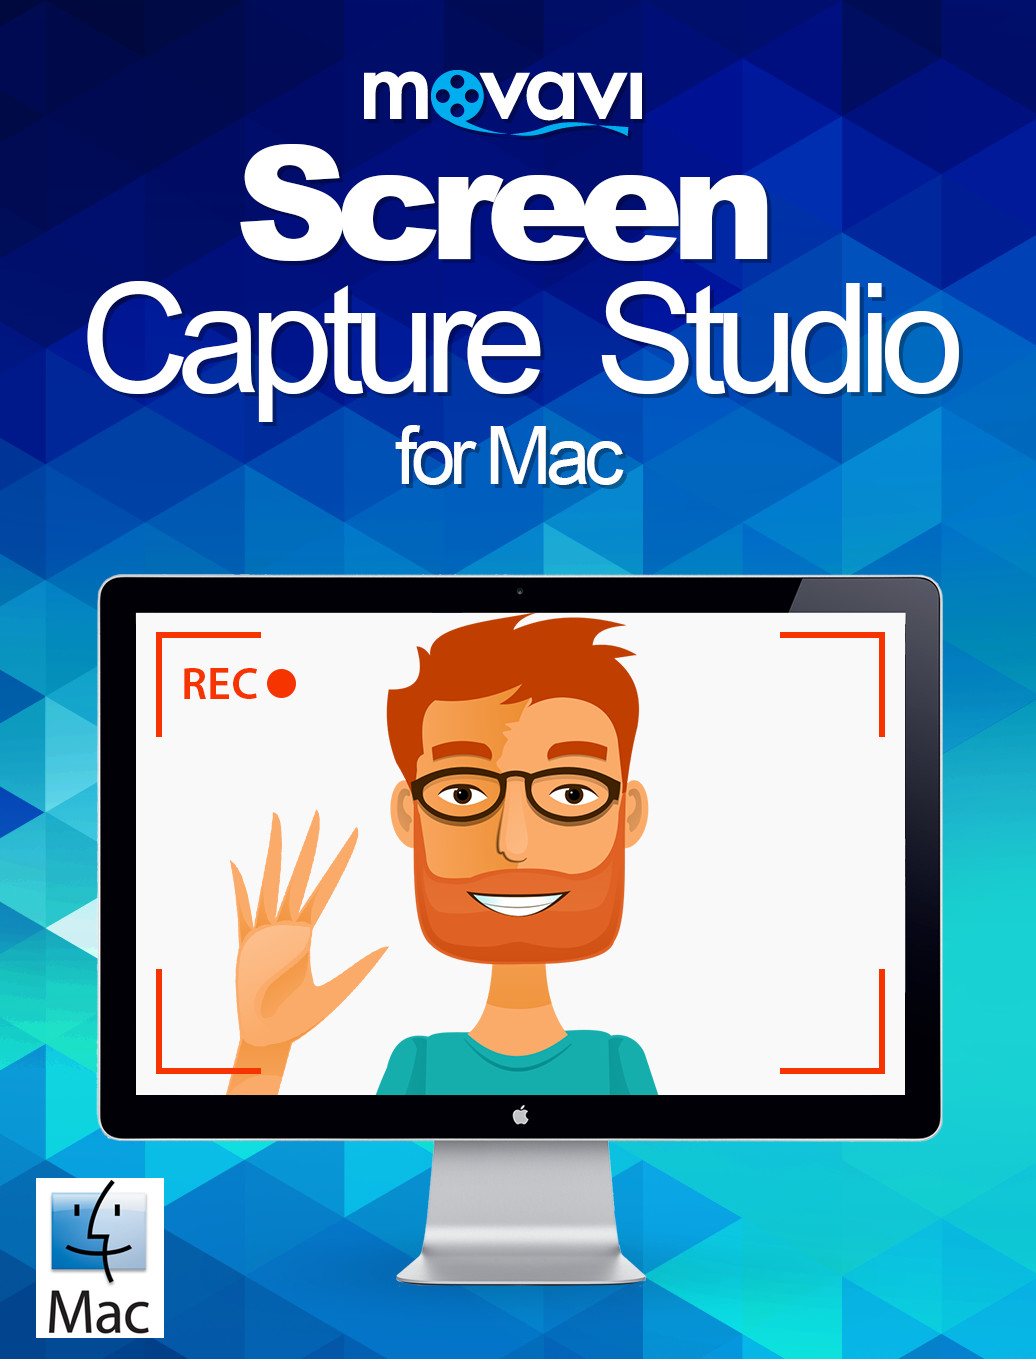 Movavi screen capture studio for mac